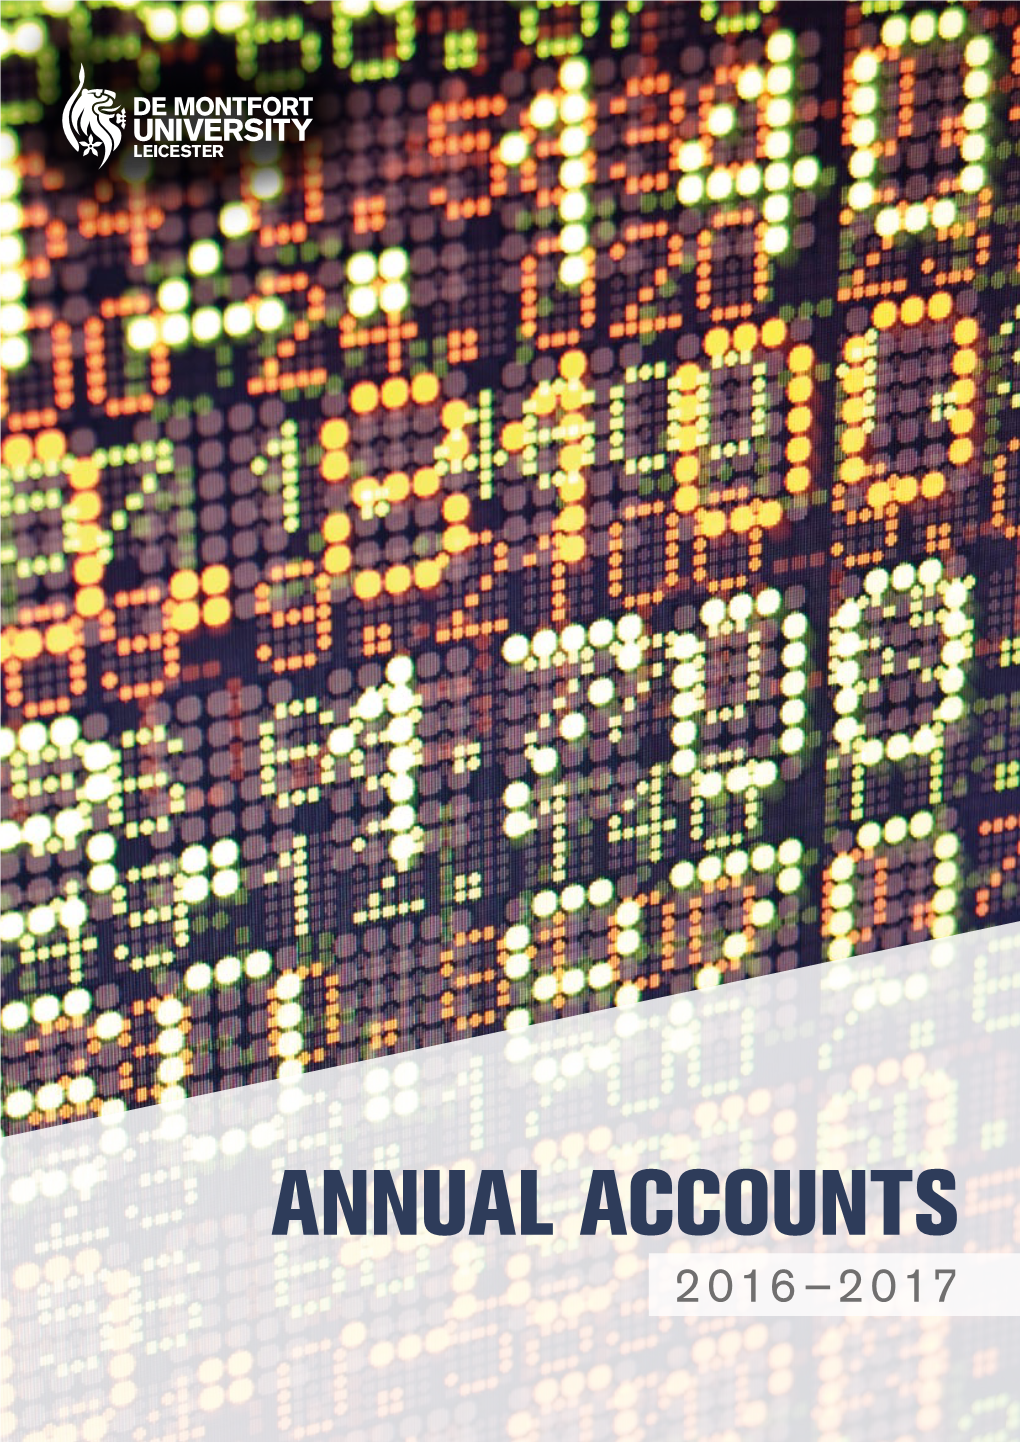 2016/17 Annual Accounts